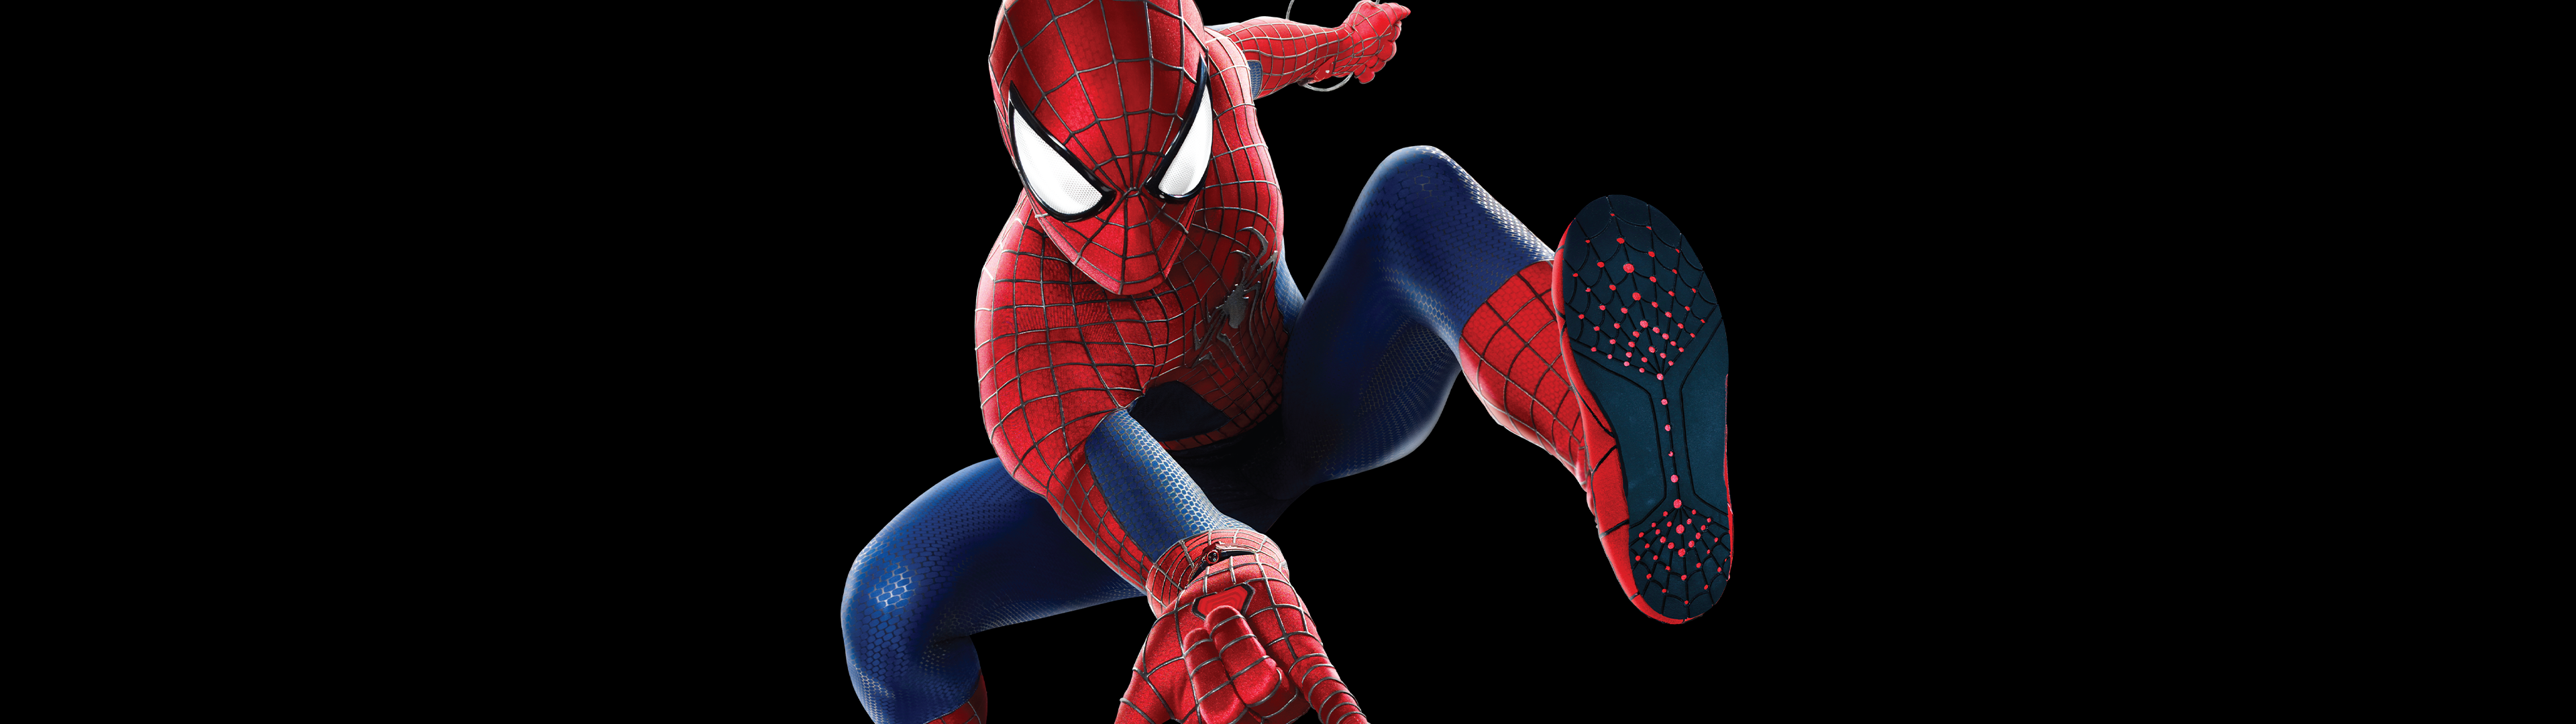 Spider-Man Wallpaper 4K, Marvel Superheroes, Graphics CGI, #2915